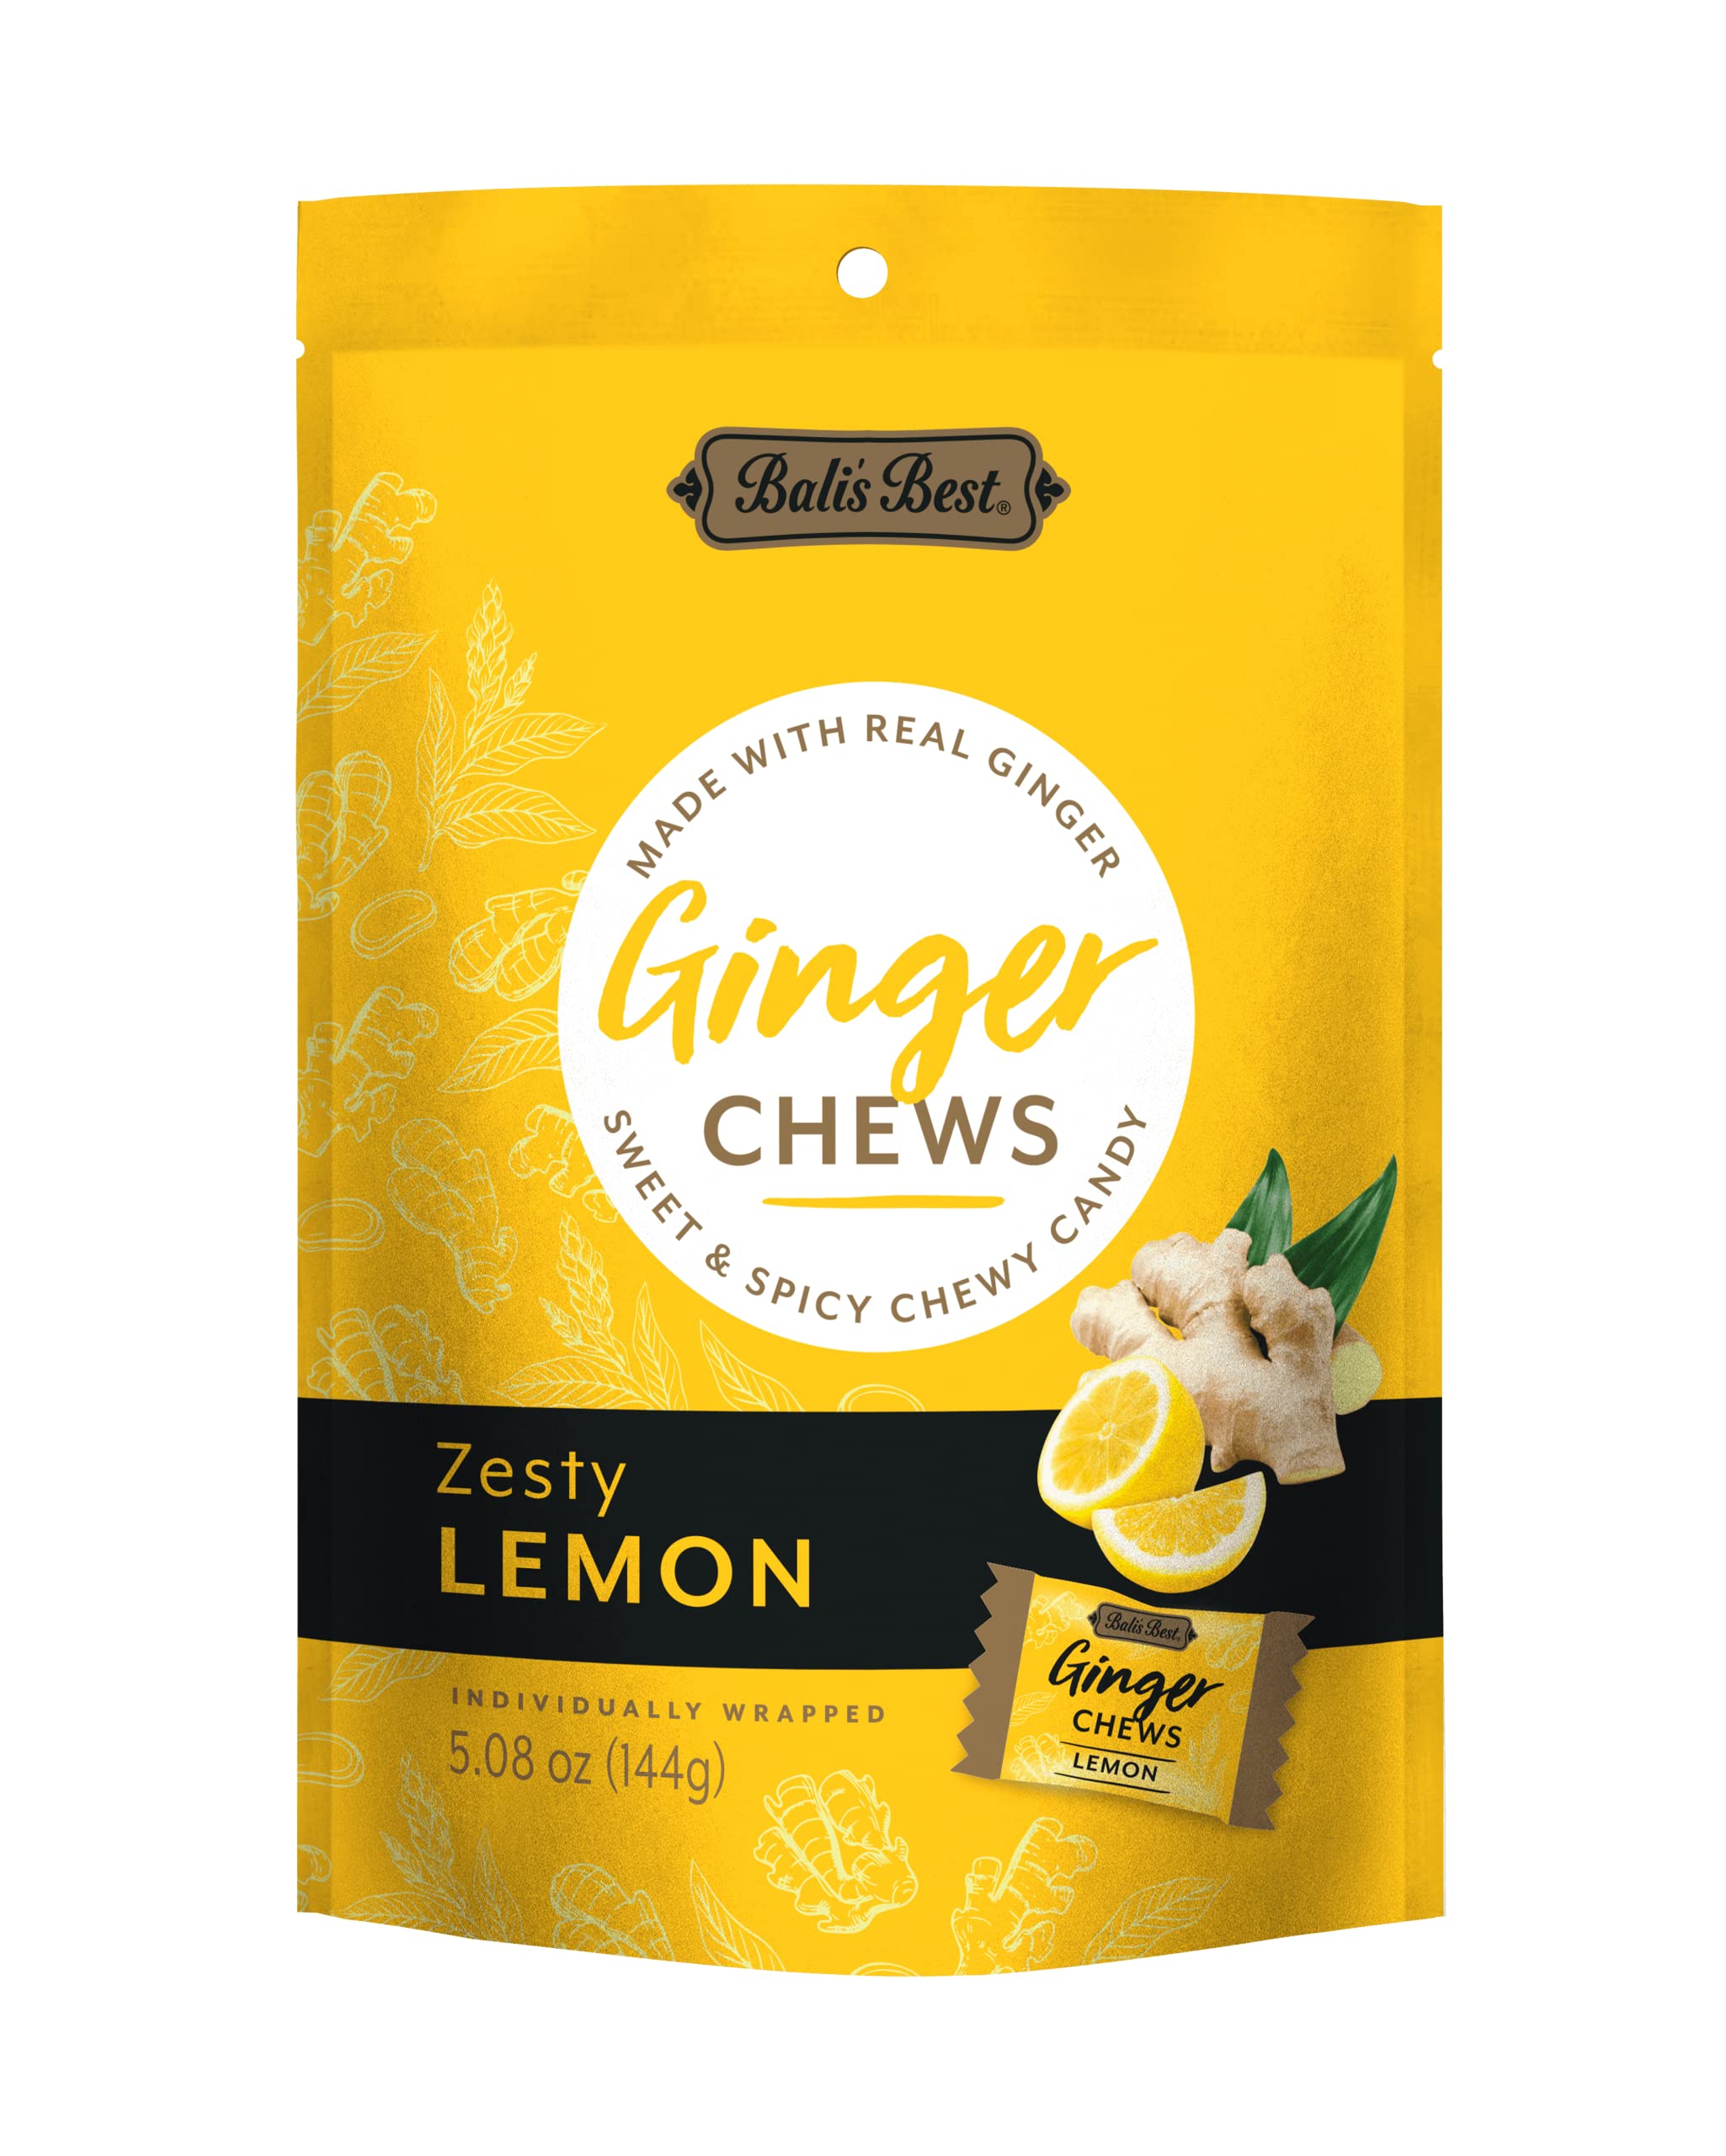 Bali's Best Zesty Lemon Ginger Chews 5.08 Oz Pouch